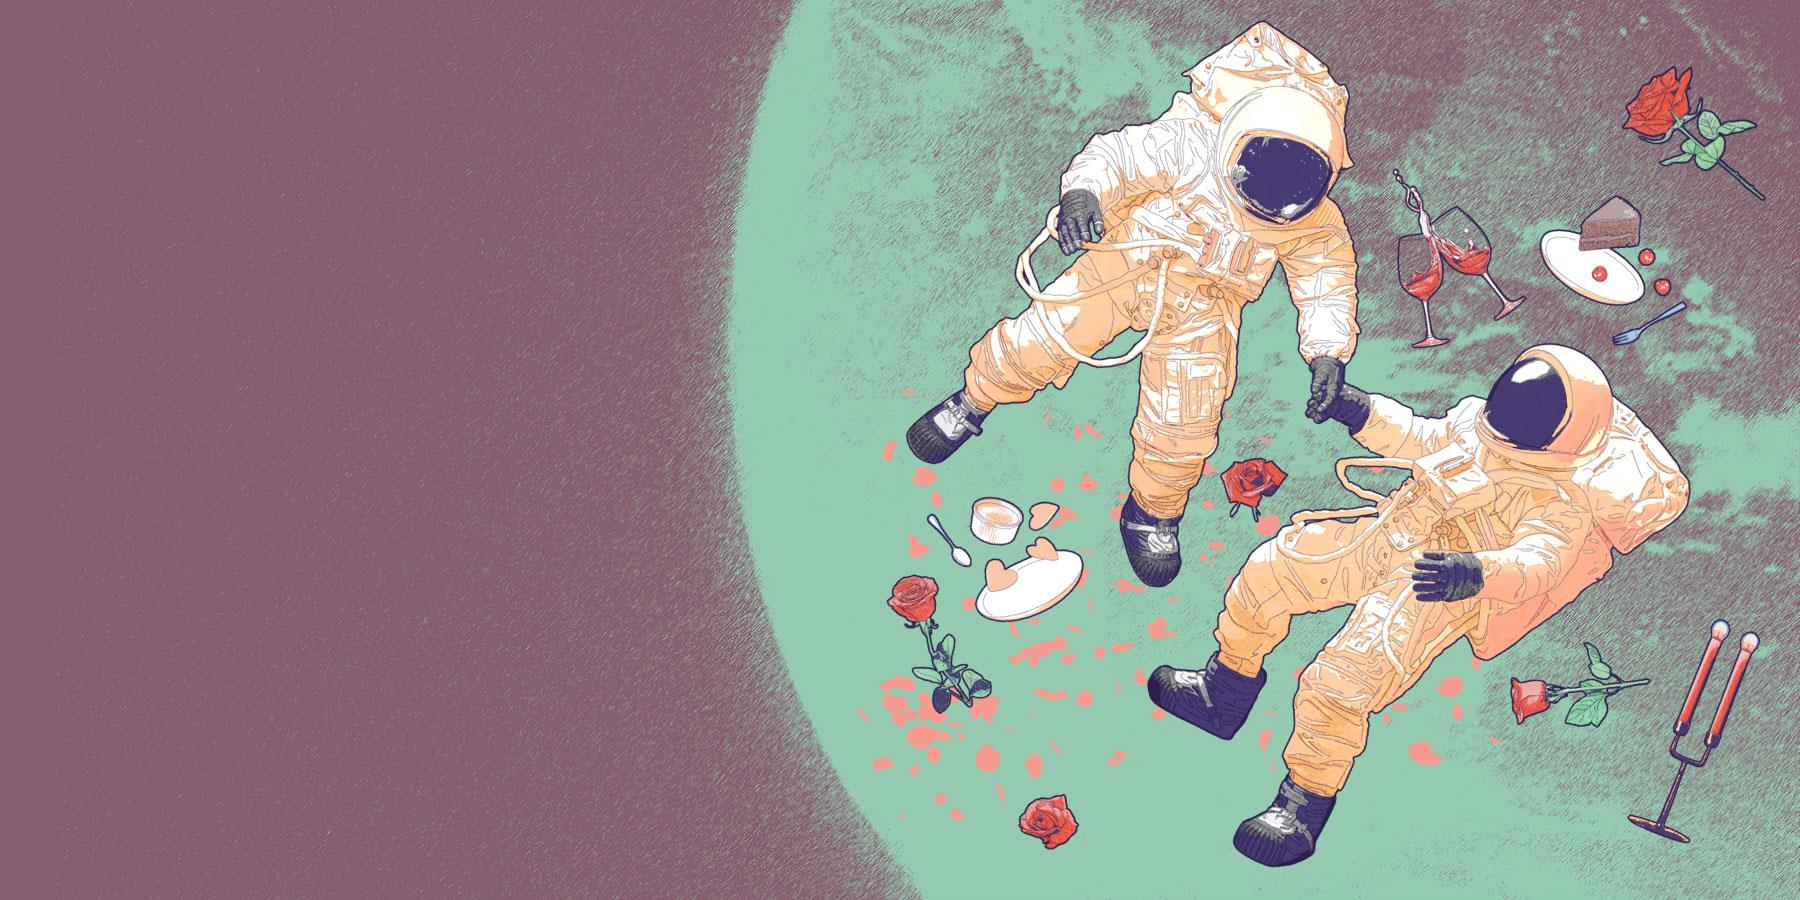 Astronauts in love